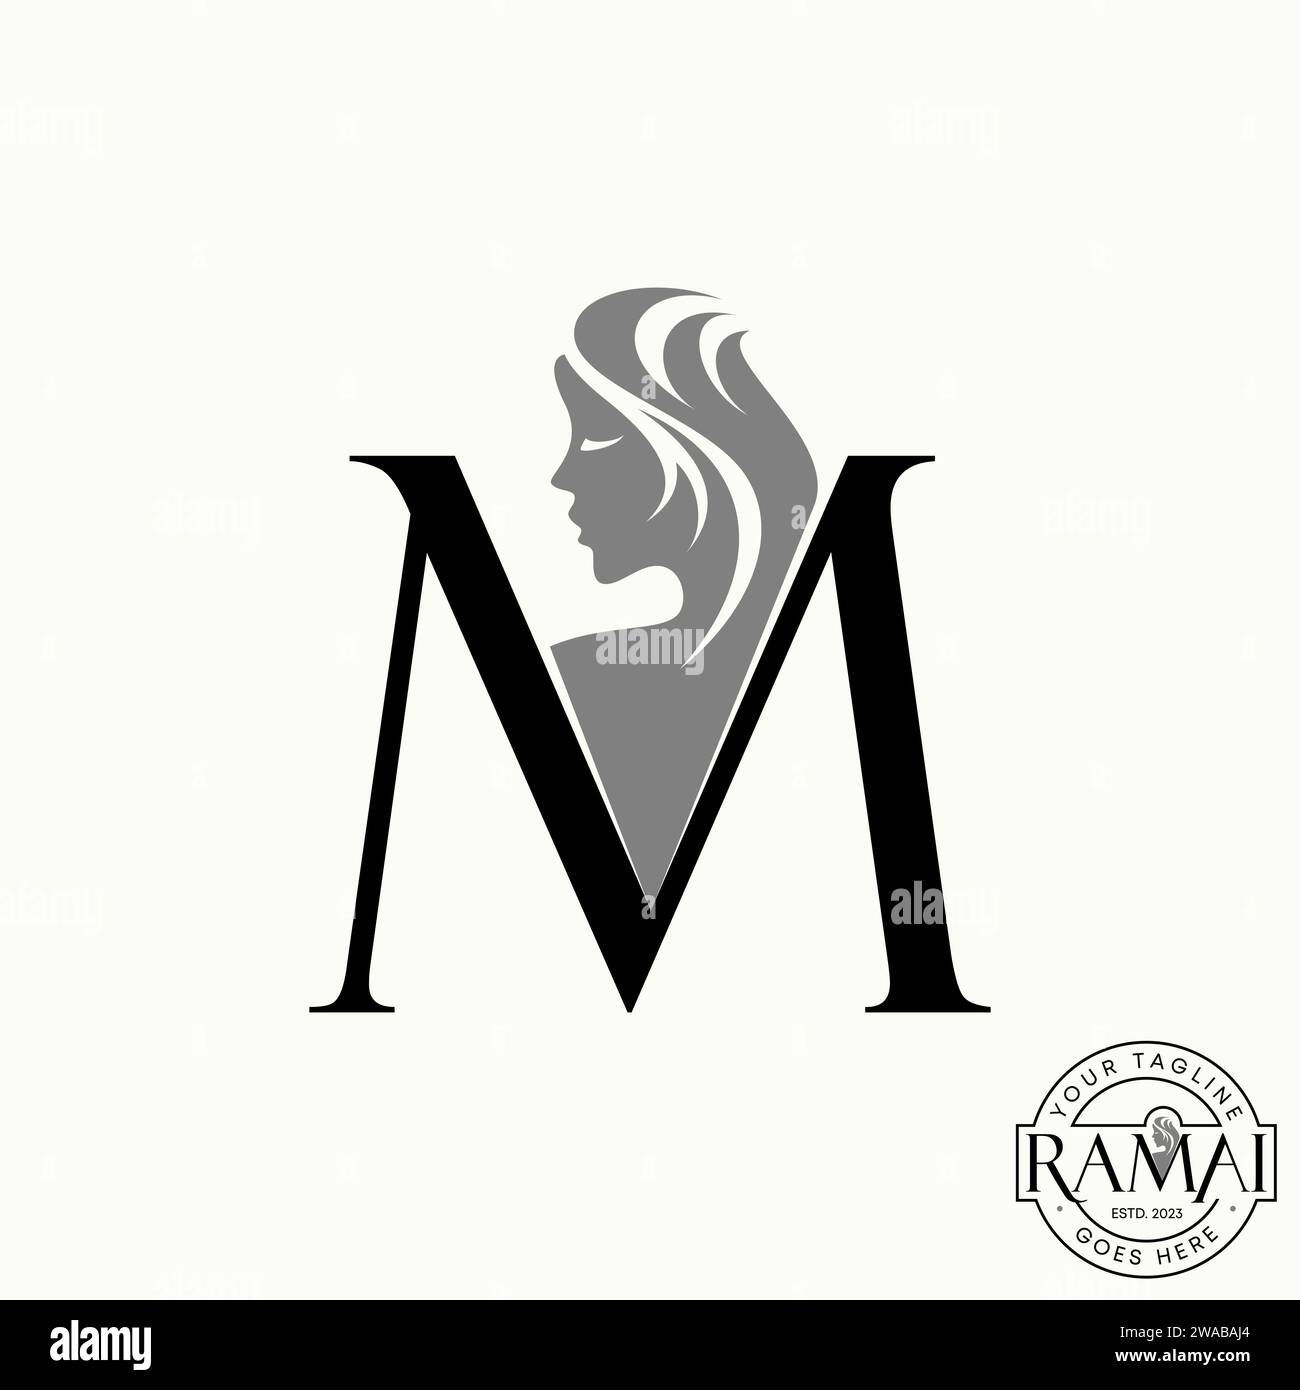 Letter M Logo Vector Design Images, Creative Brand Letter M Men Fashion  Logo Design, Men, Logo, Design PNG Image For Free Download